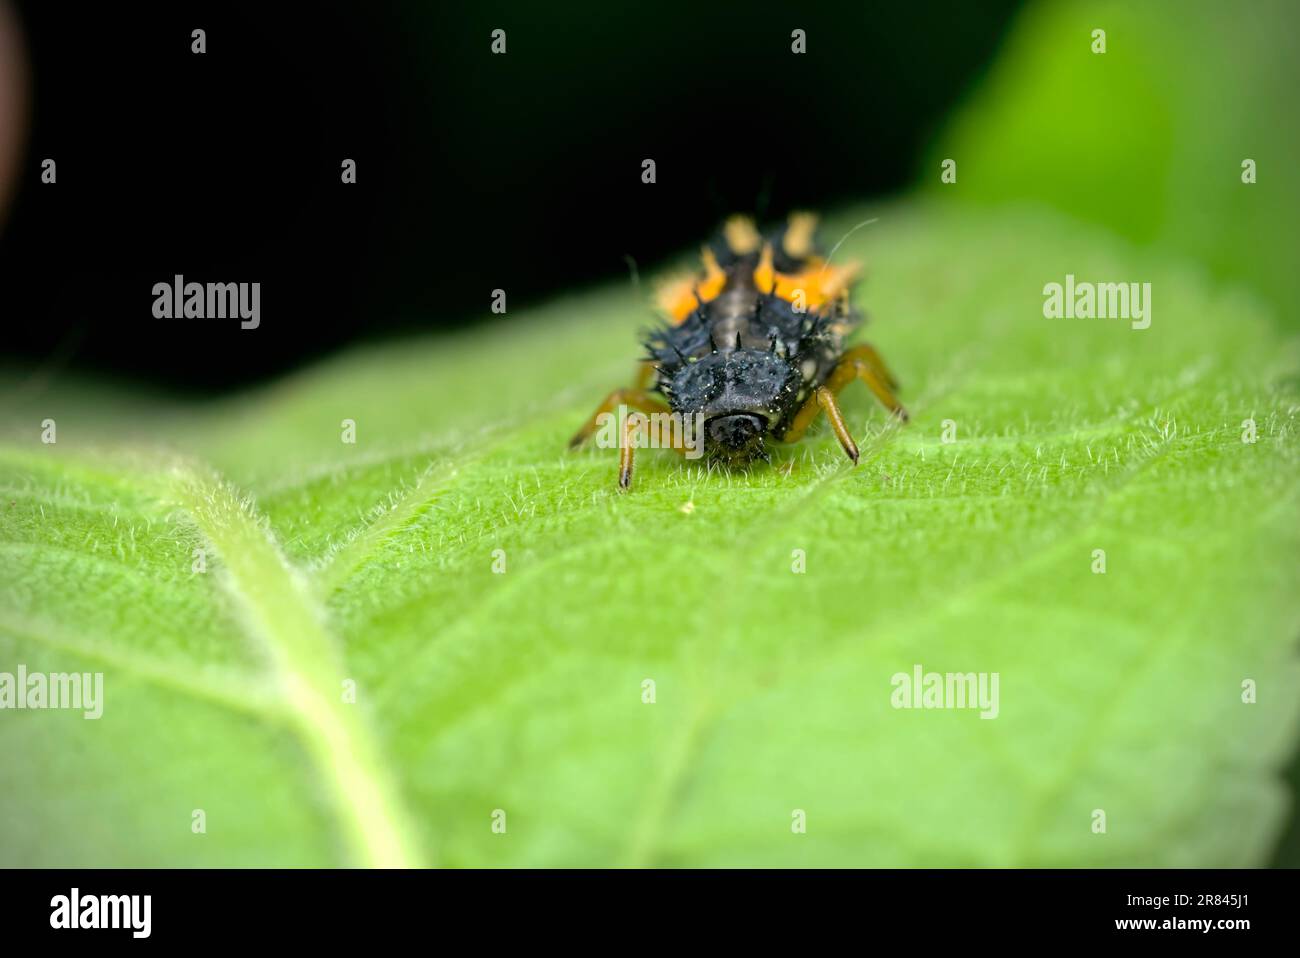 Larva of an Asian lady beetle (Harmonia axyridis) crawling on a leaf, macro photography, insects, closeup, nature, biodiversity Stock Photo